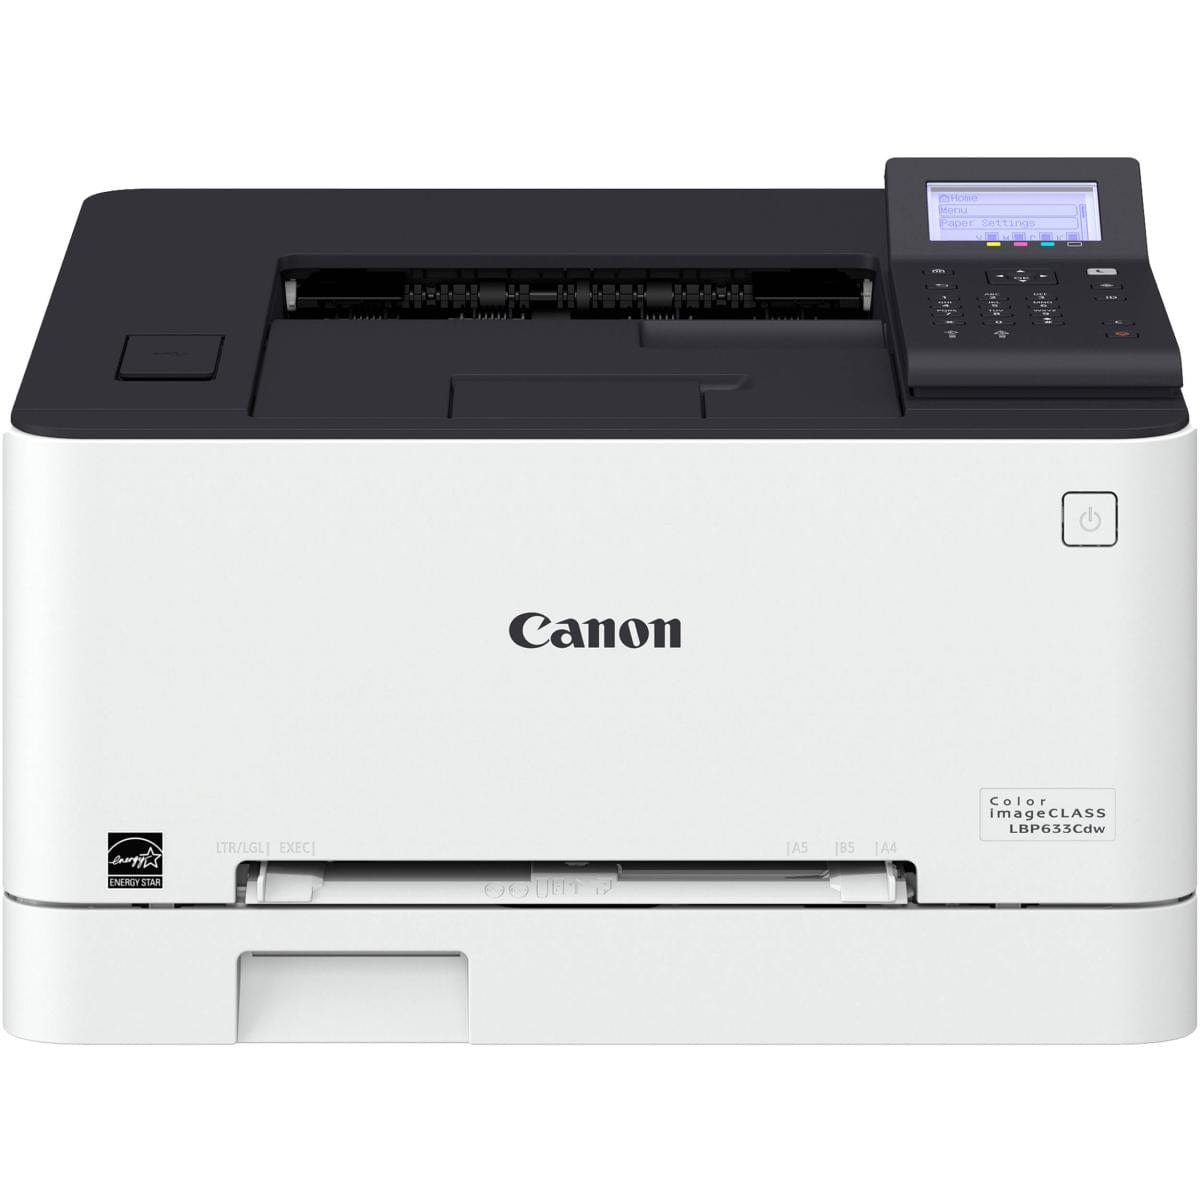 CANON Printers Canon imageCLASS LBP-633CDW Color Laser printer